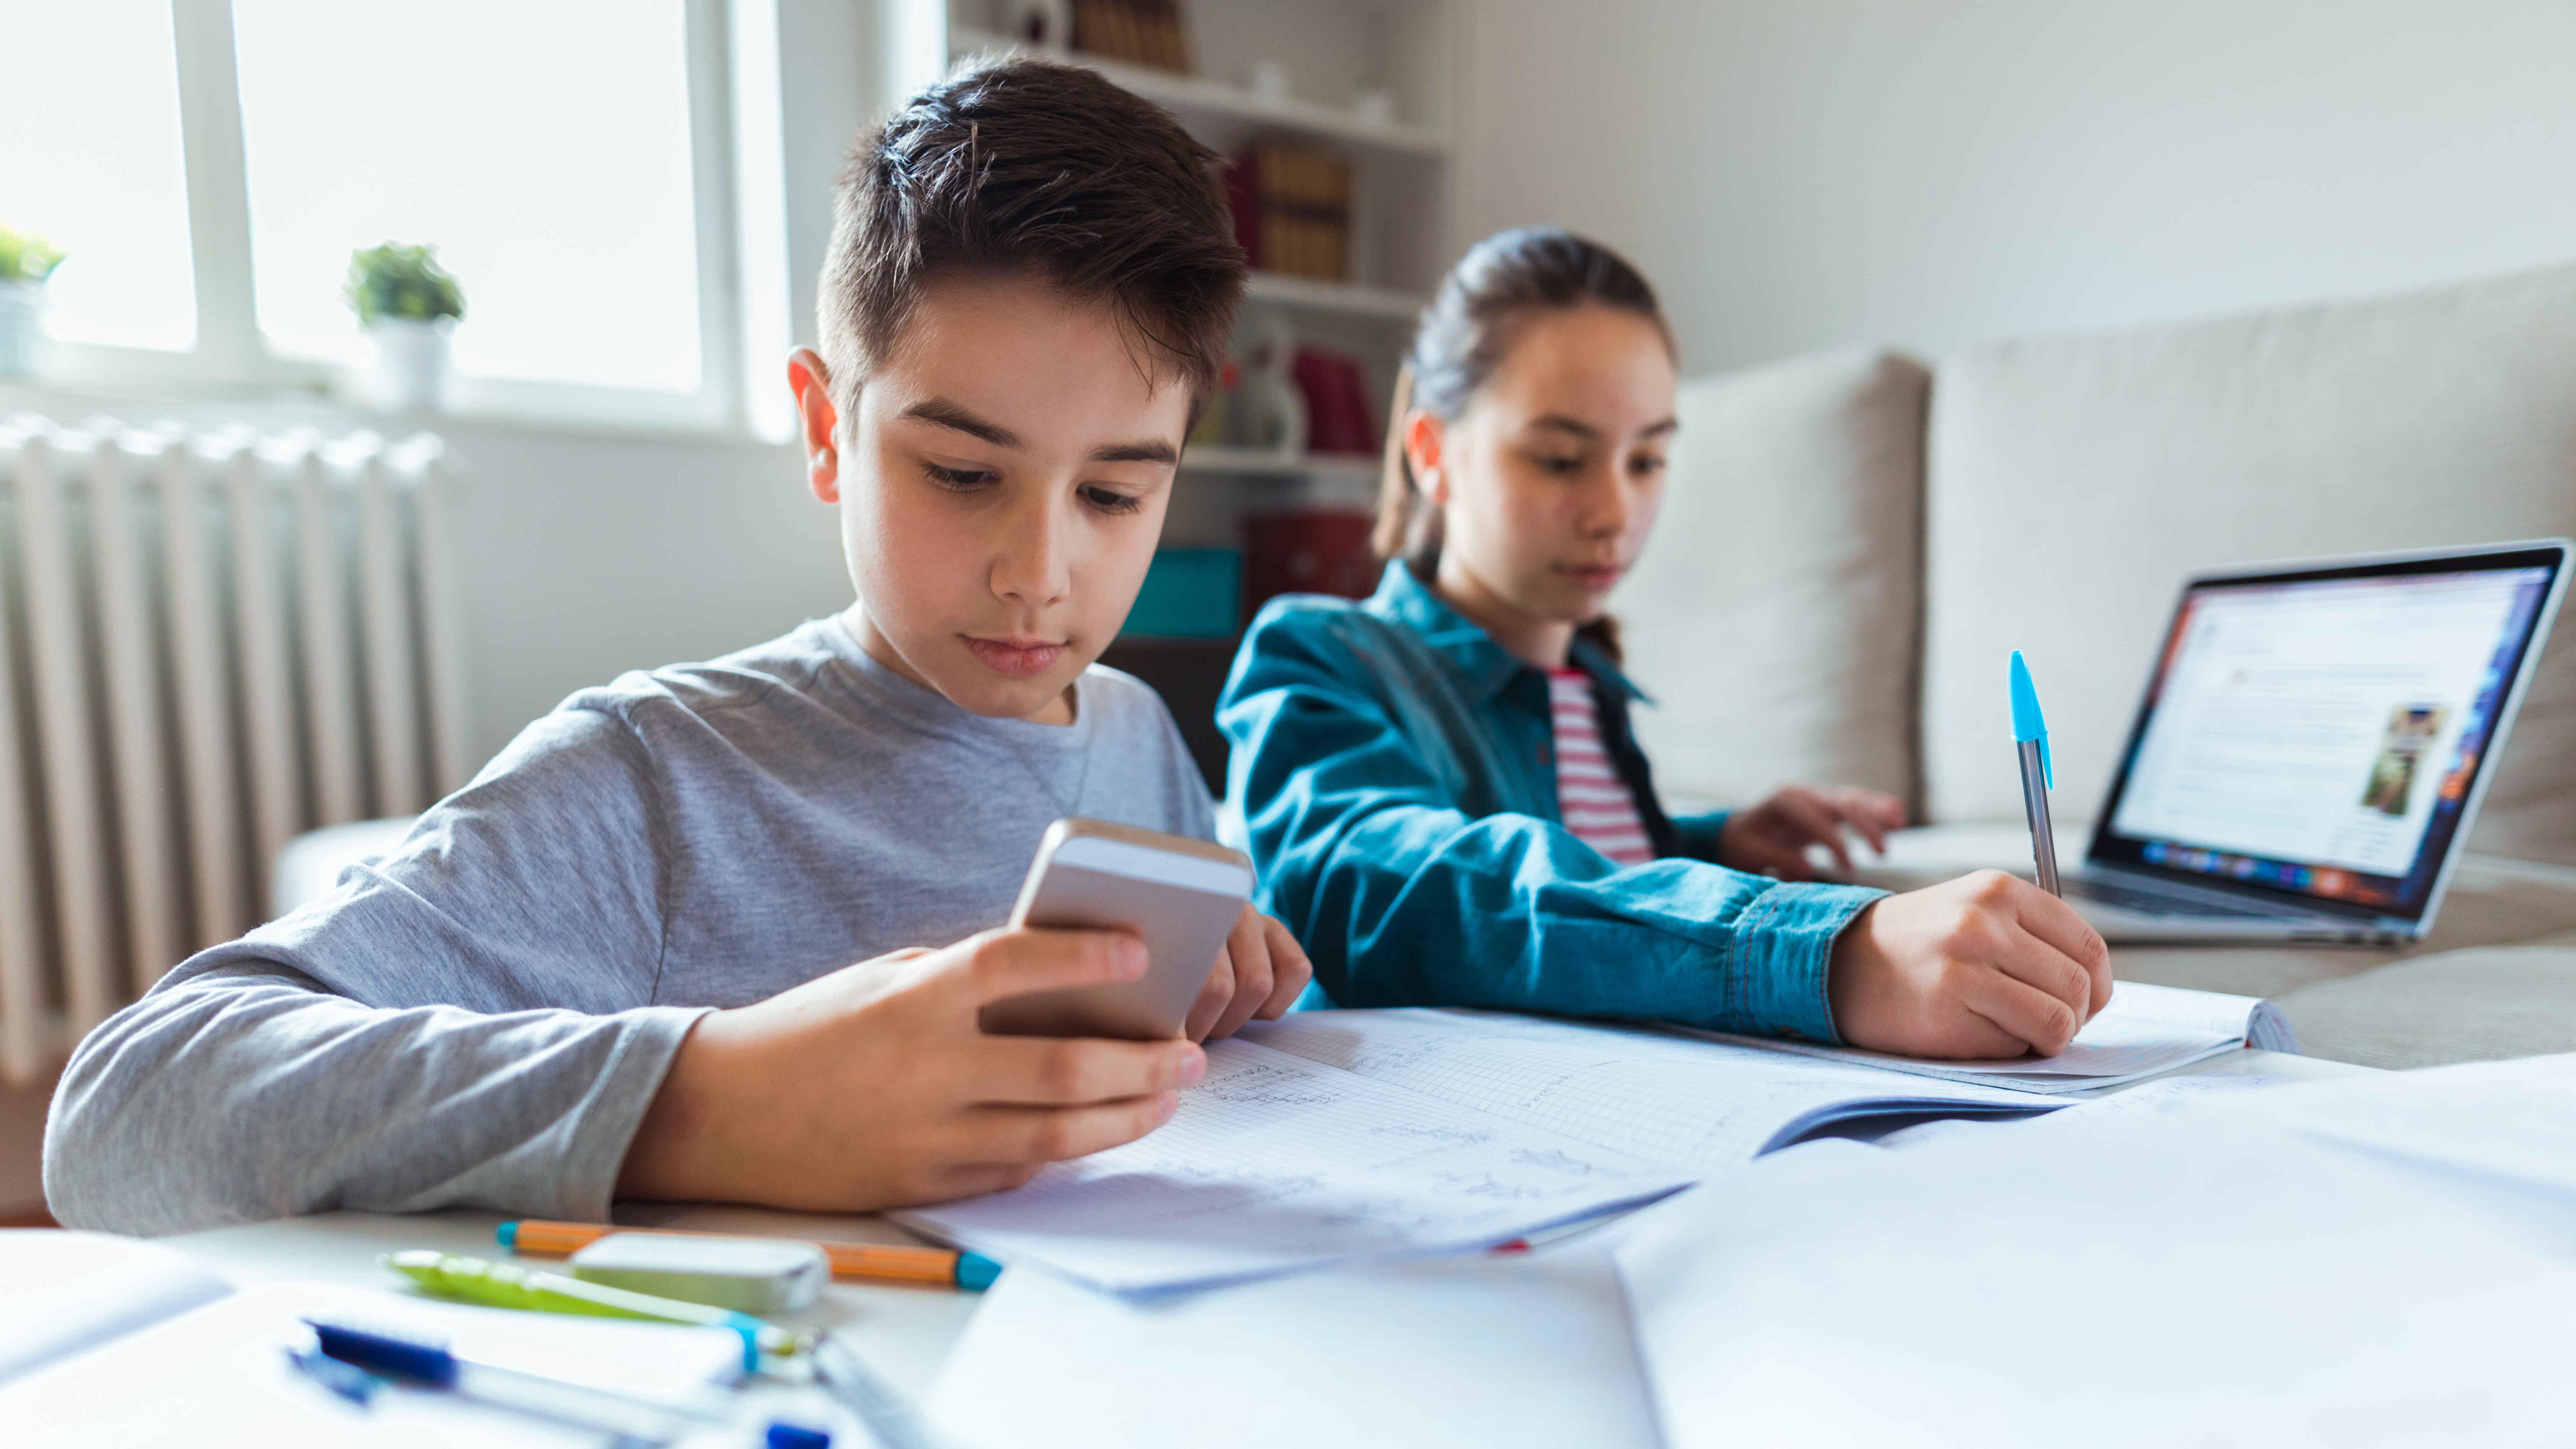 Children use tech to study